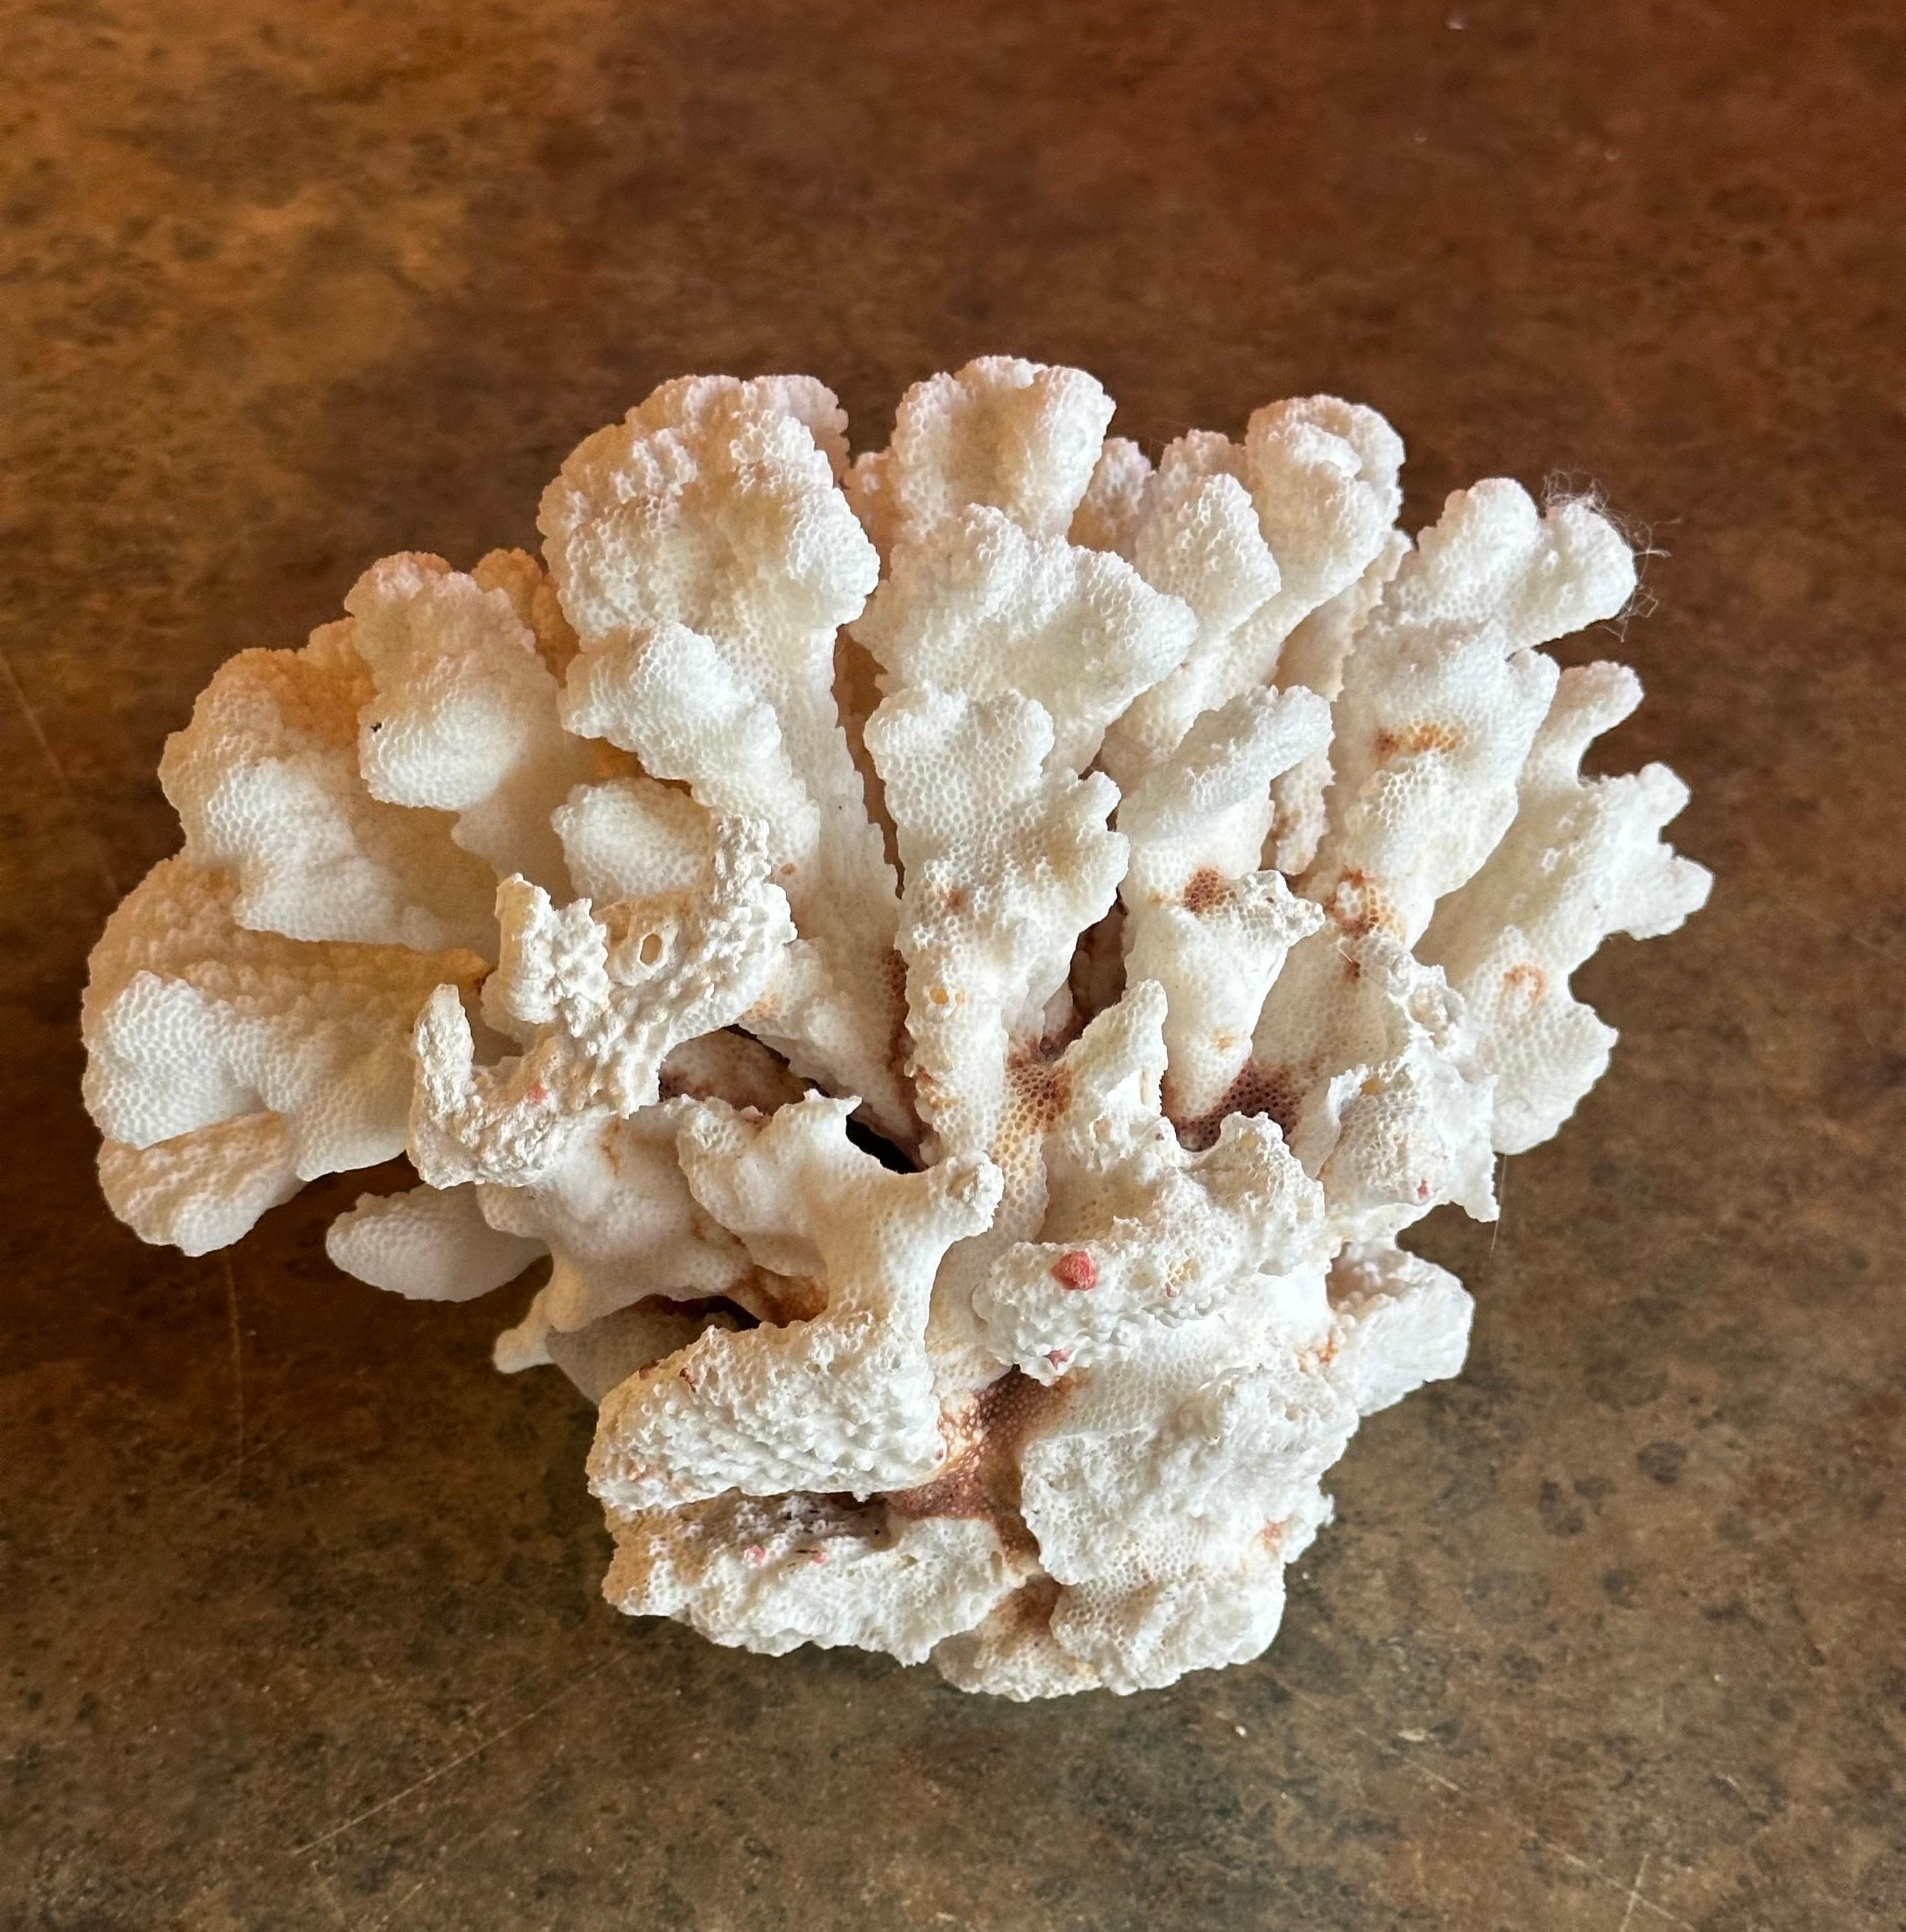 Großes natürliches weißes Meereskorallen-Exemplar (Koralle)